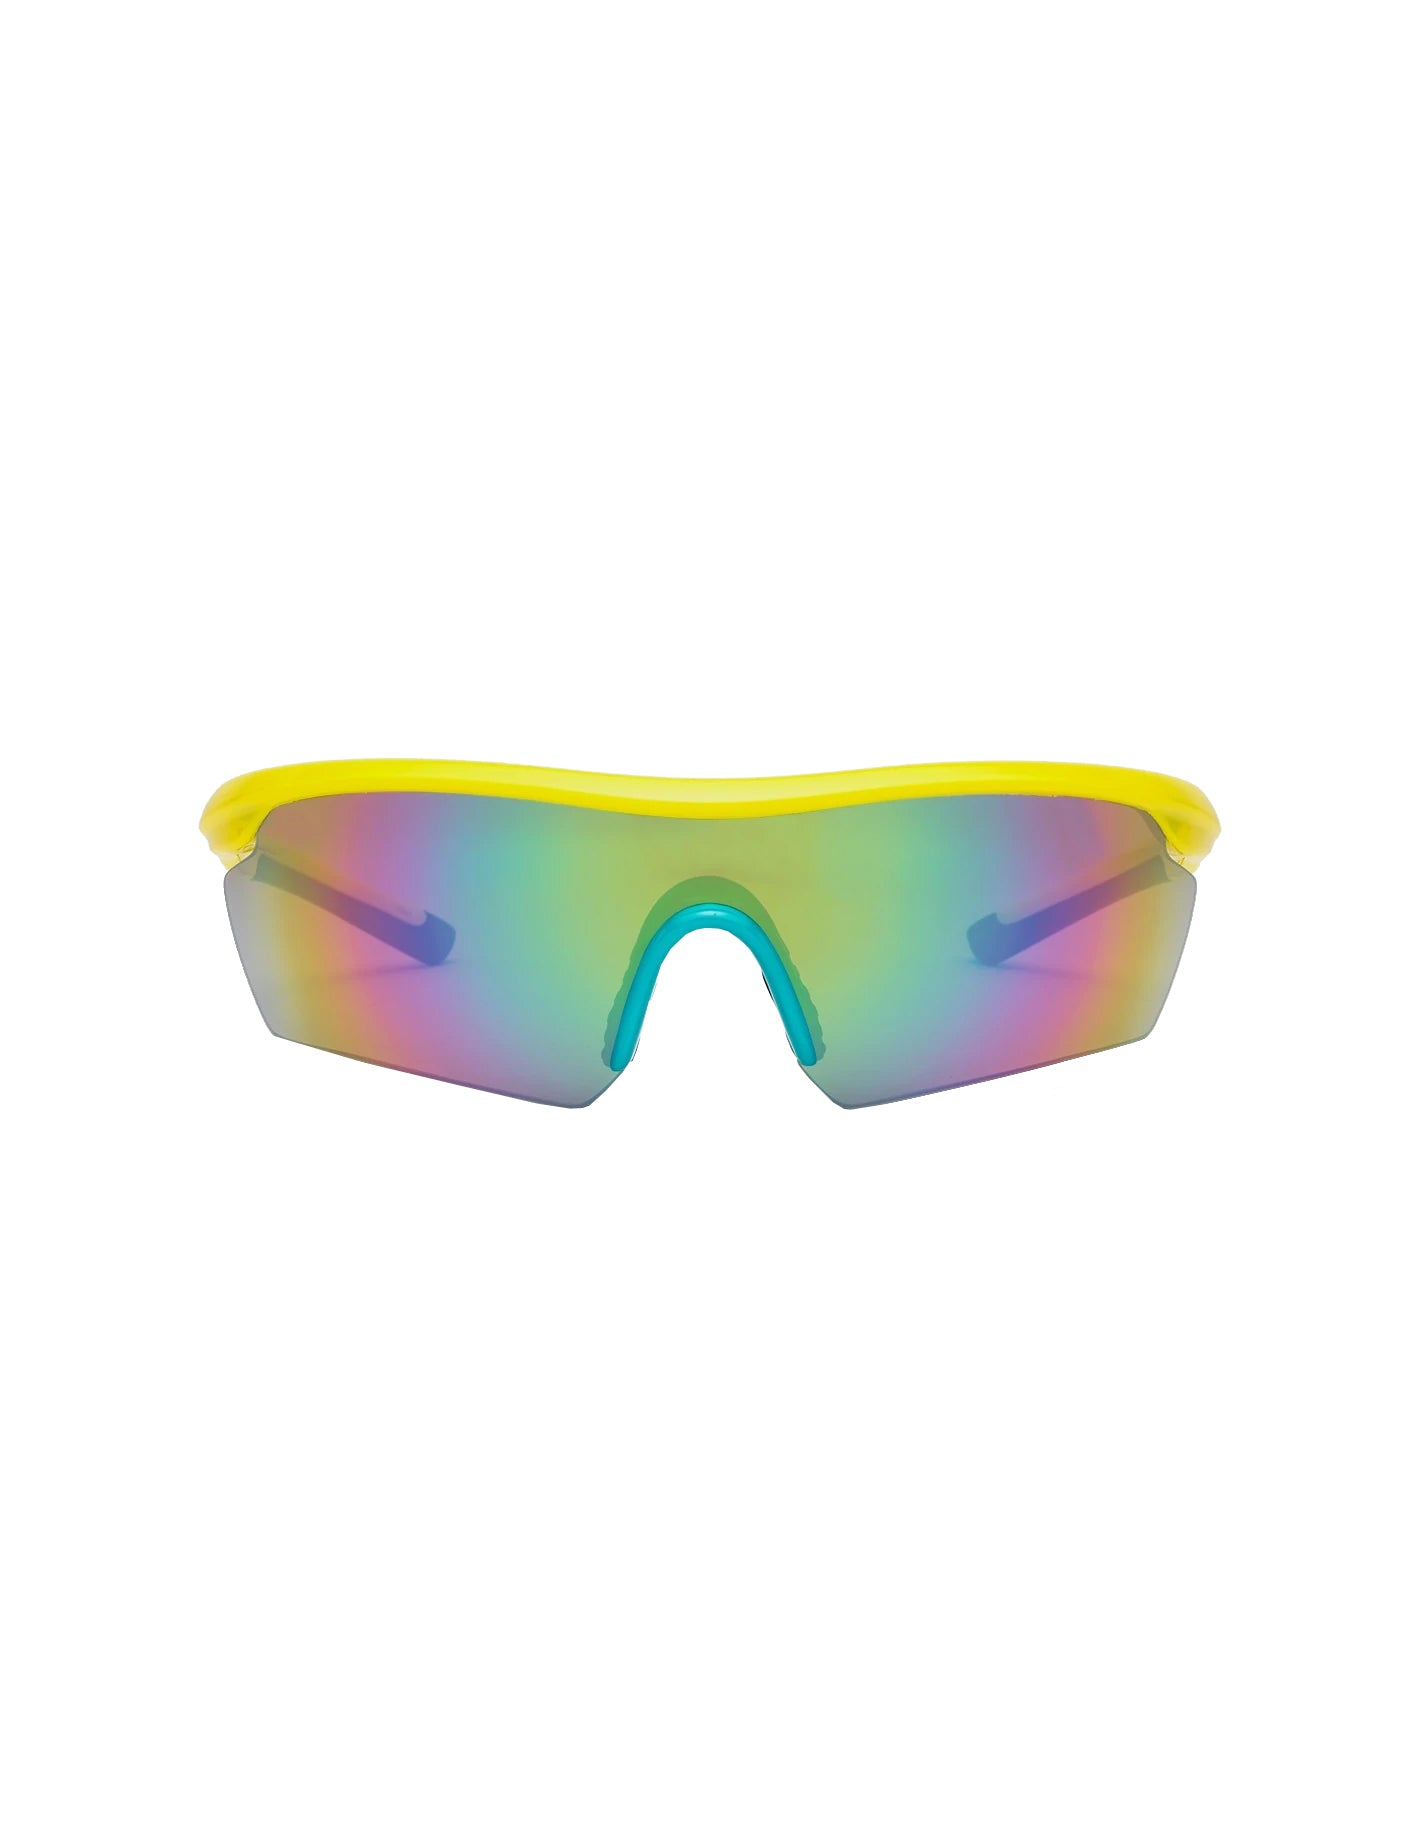 Volcom Macho Sunglasses GlossYellow-Aqua Rainbow Mirror